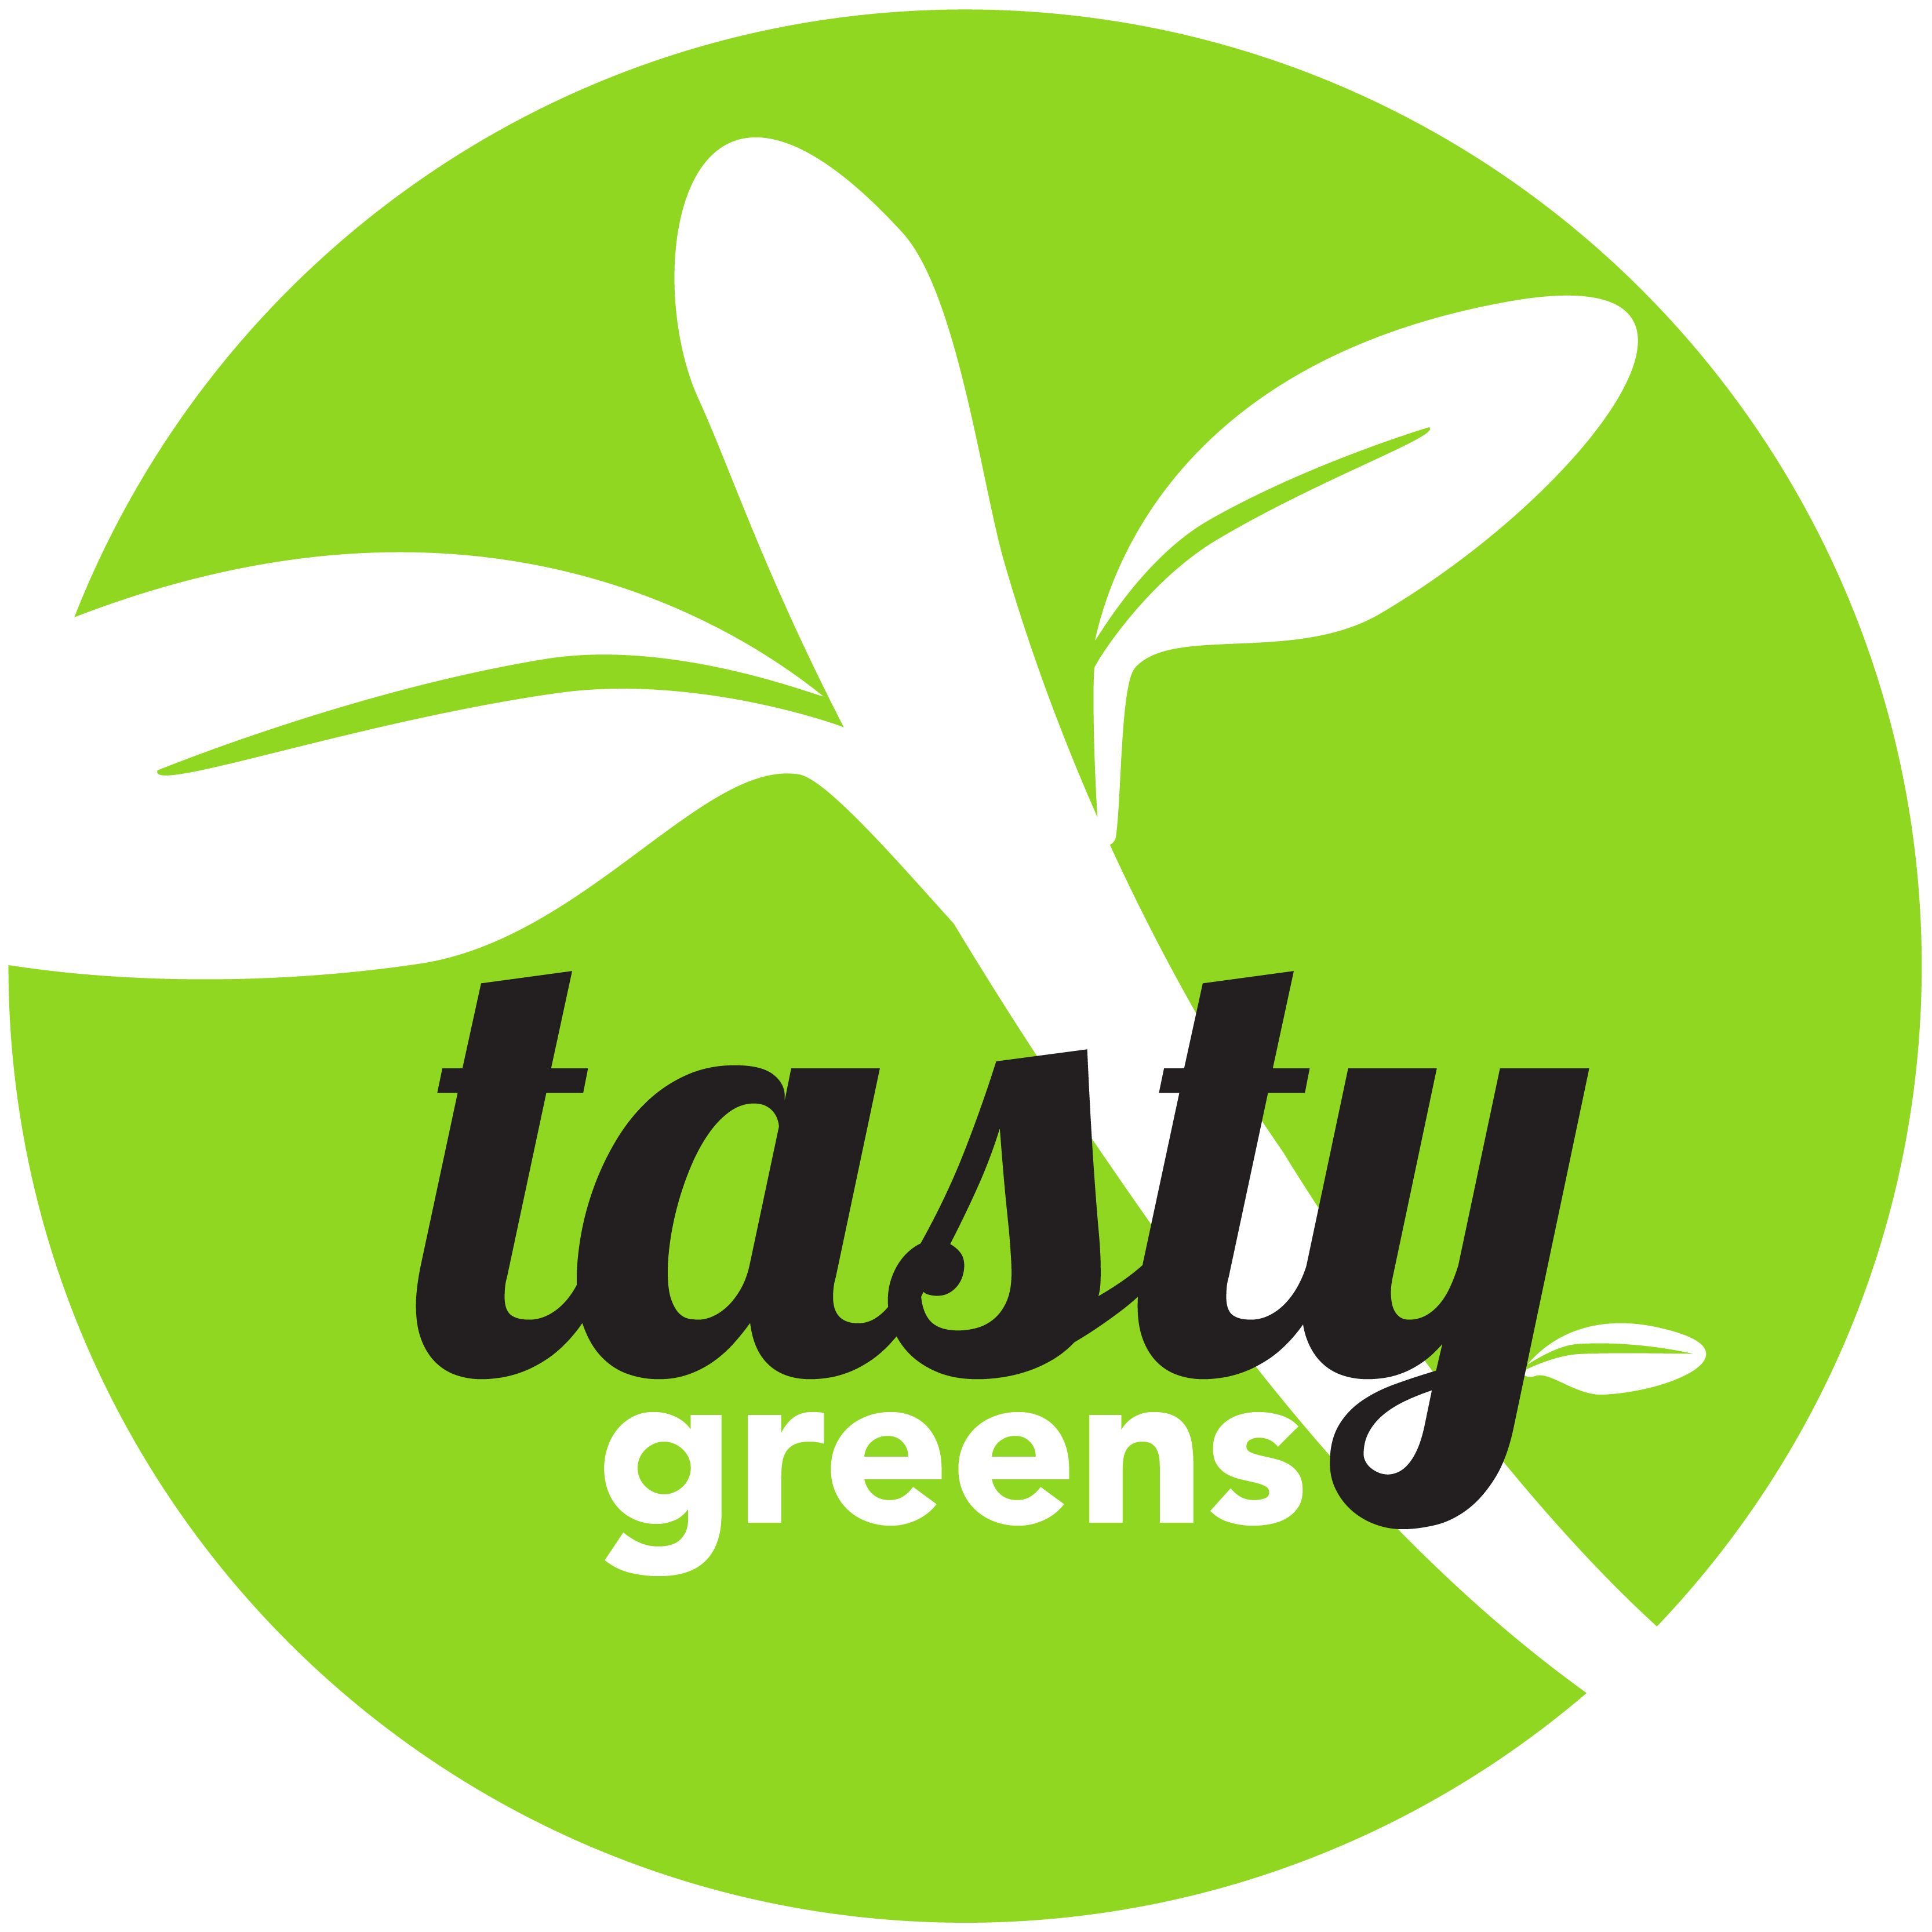 Tasty Greens